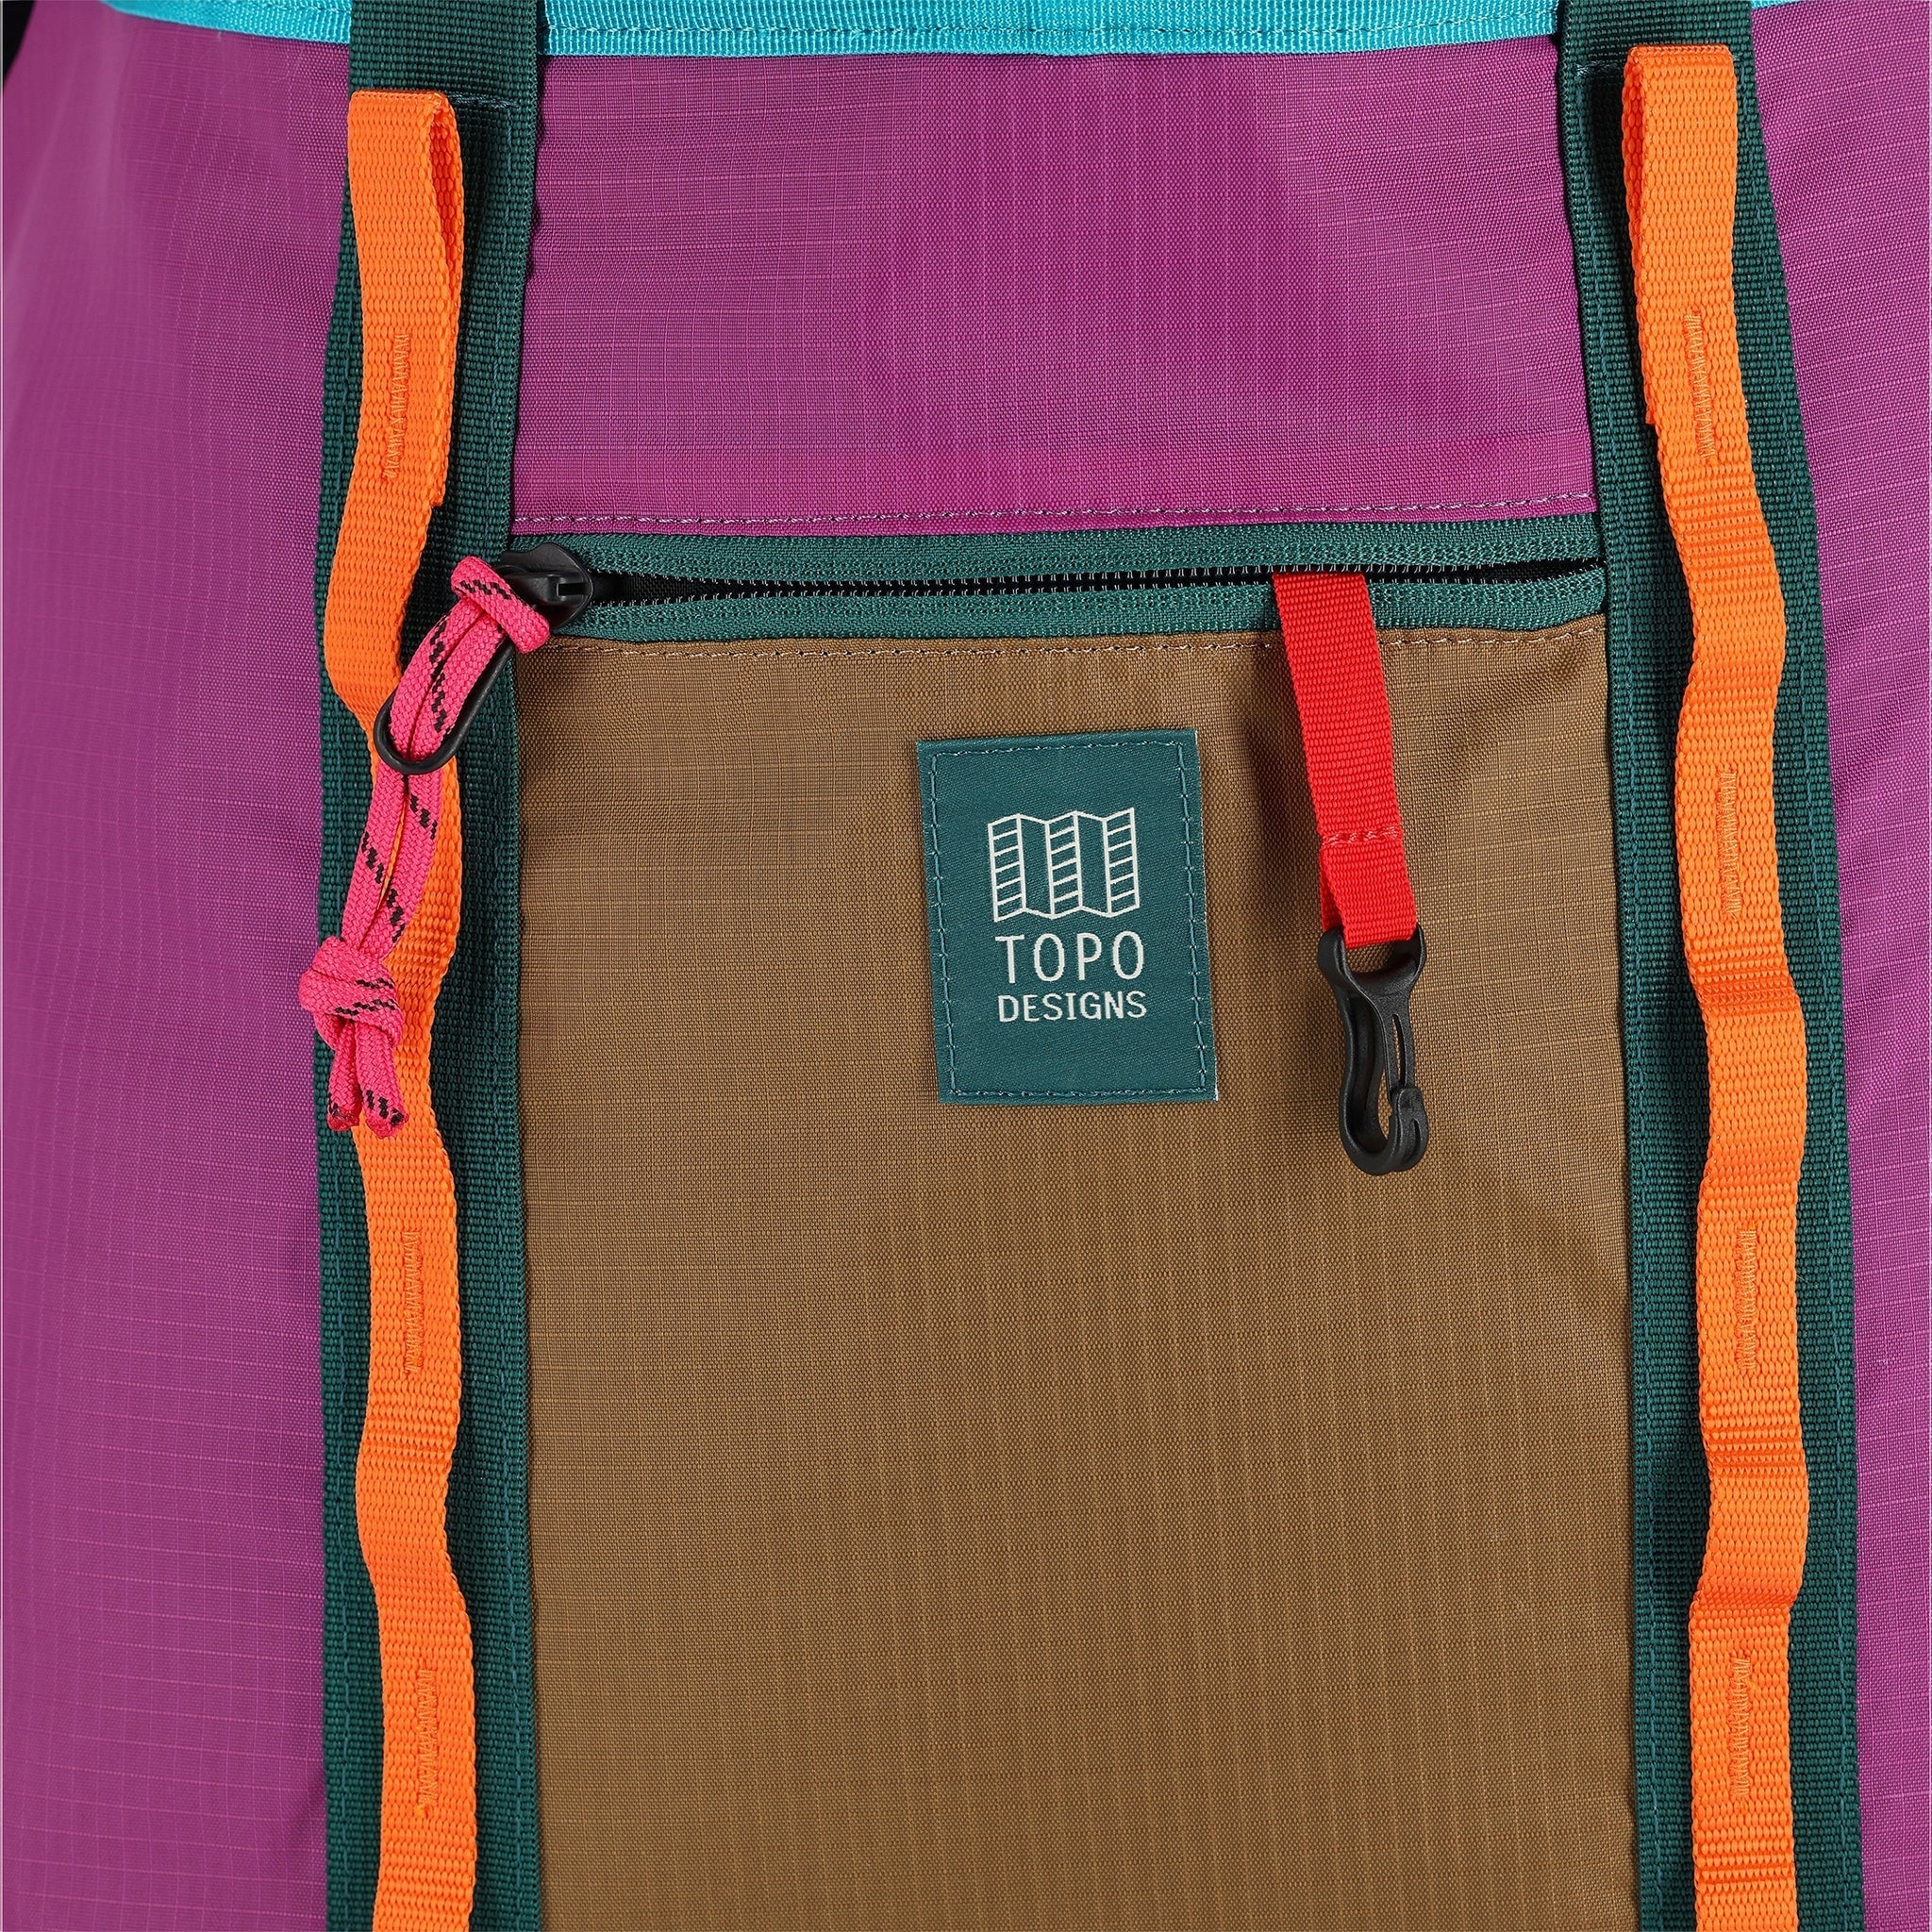 Topo Designs Mountain Utility Tote Tote Bag Topo Designs 